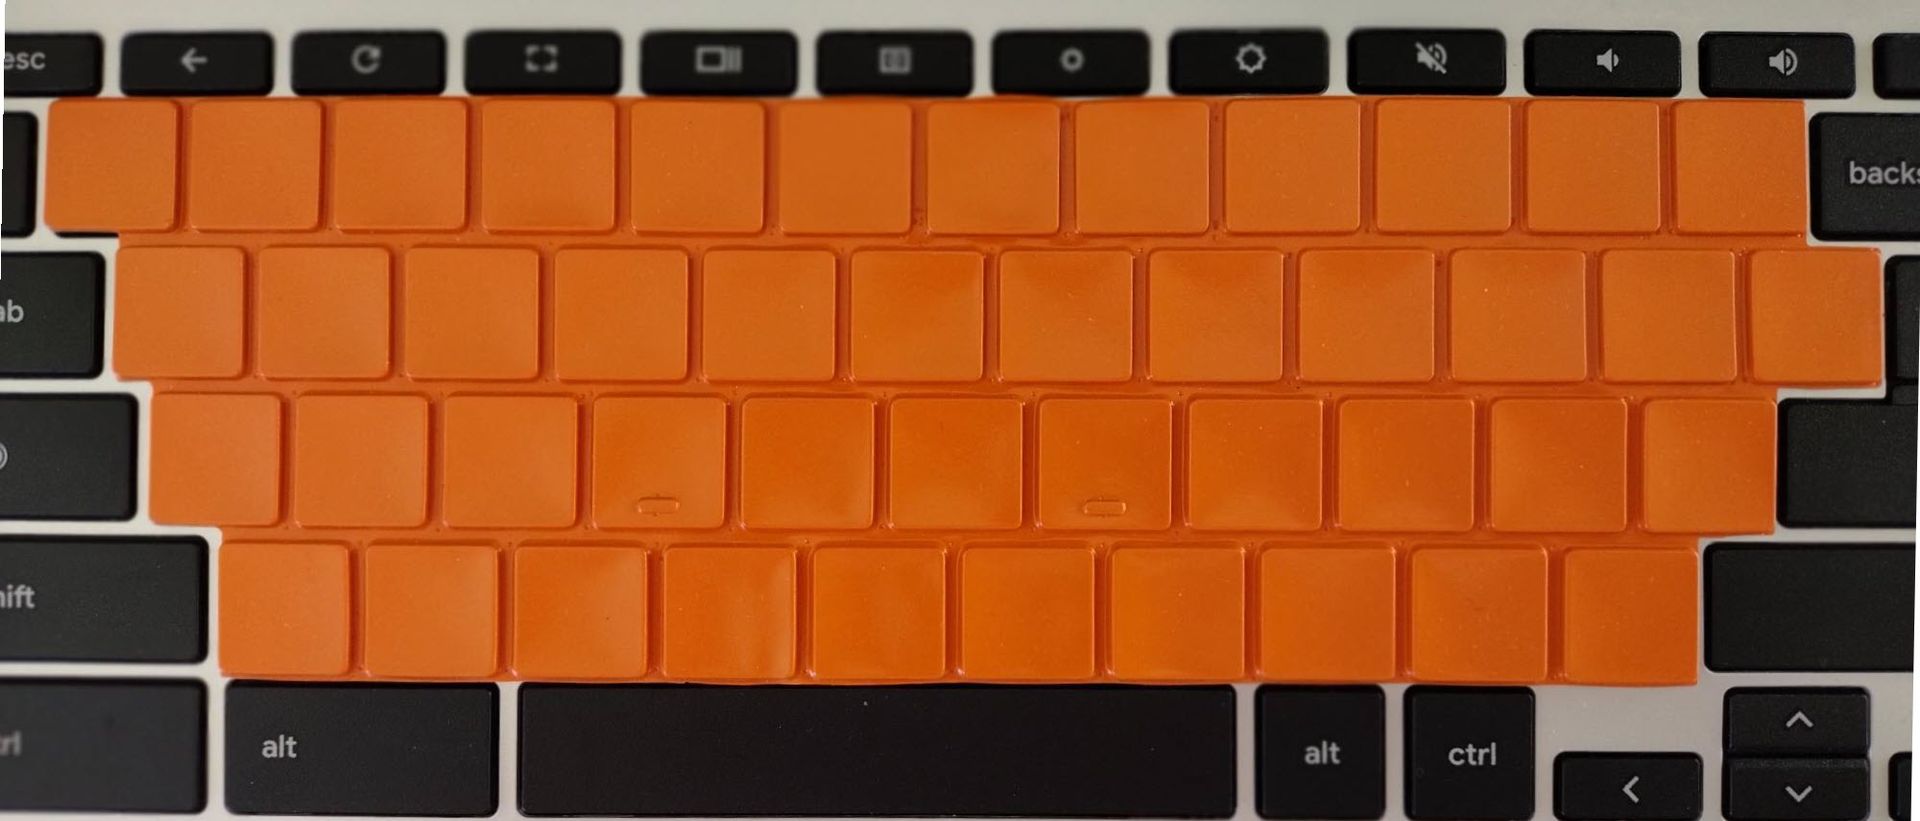 SpeedSkin's UltraSlim keyboard cover fits most laptops and flat-key, PC keyboards. 